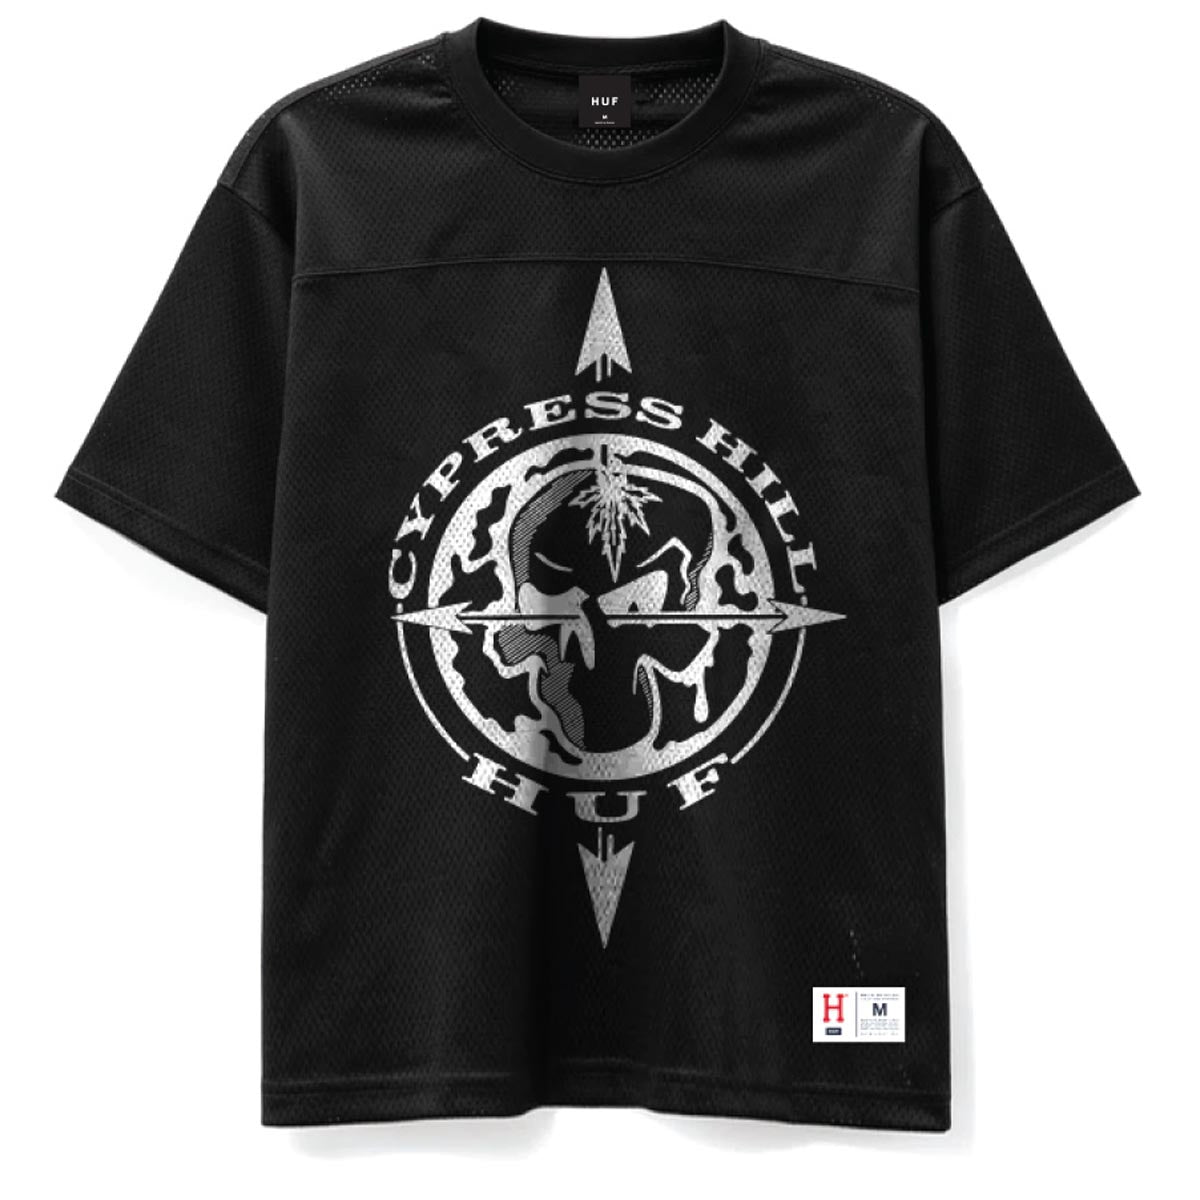 Huf x Cypress Hill Compass Mesh Jersey - Black image 1